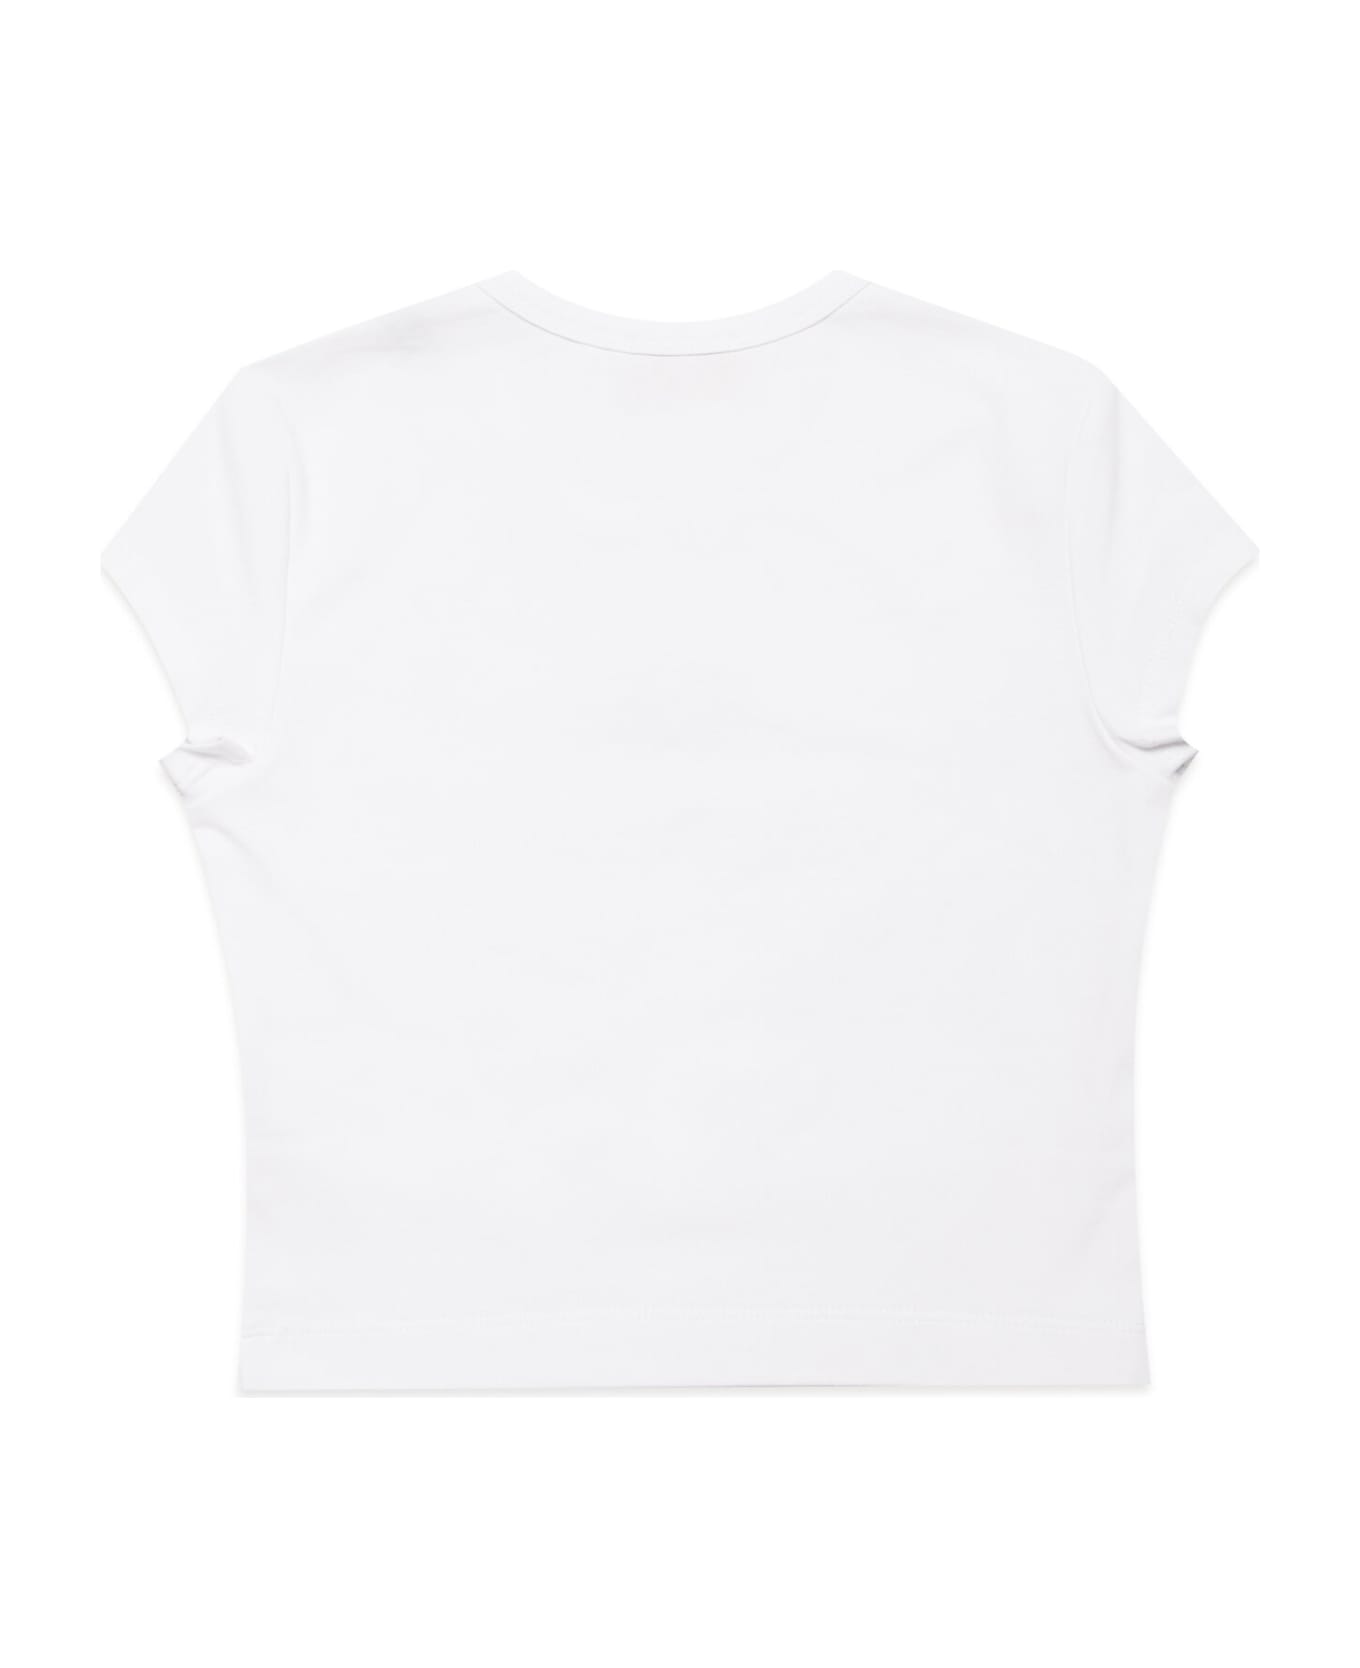 Diesel Tangie T-shirt Diesel Oval D Branded T-shirt Tシャツ＆ポロシャツ